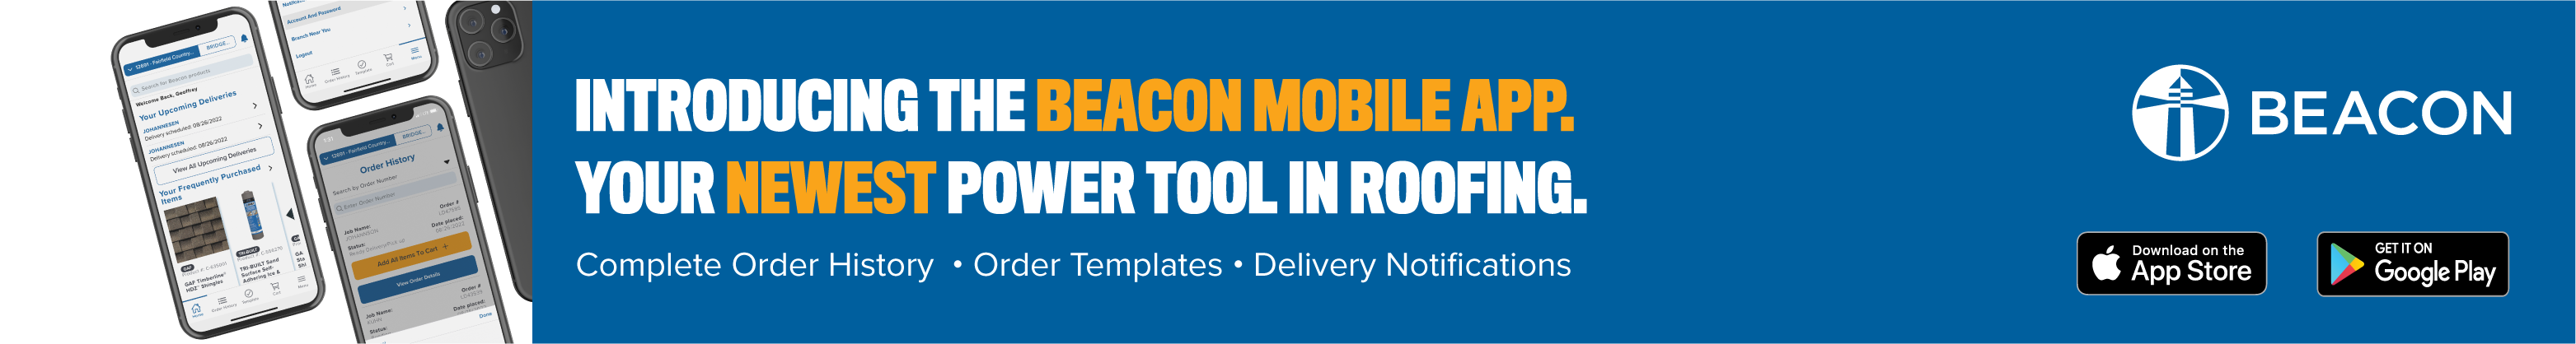 Beacon - Banner Ad - New Mobile App